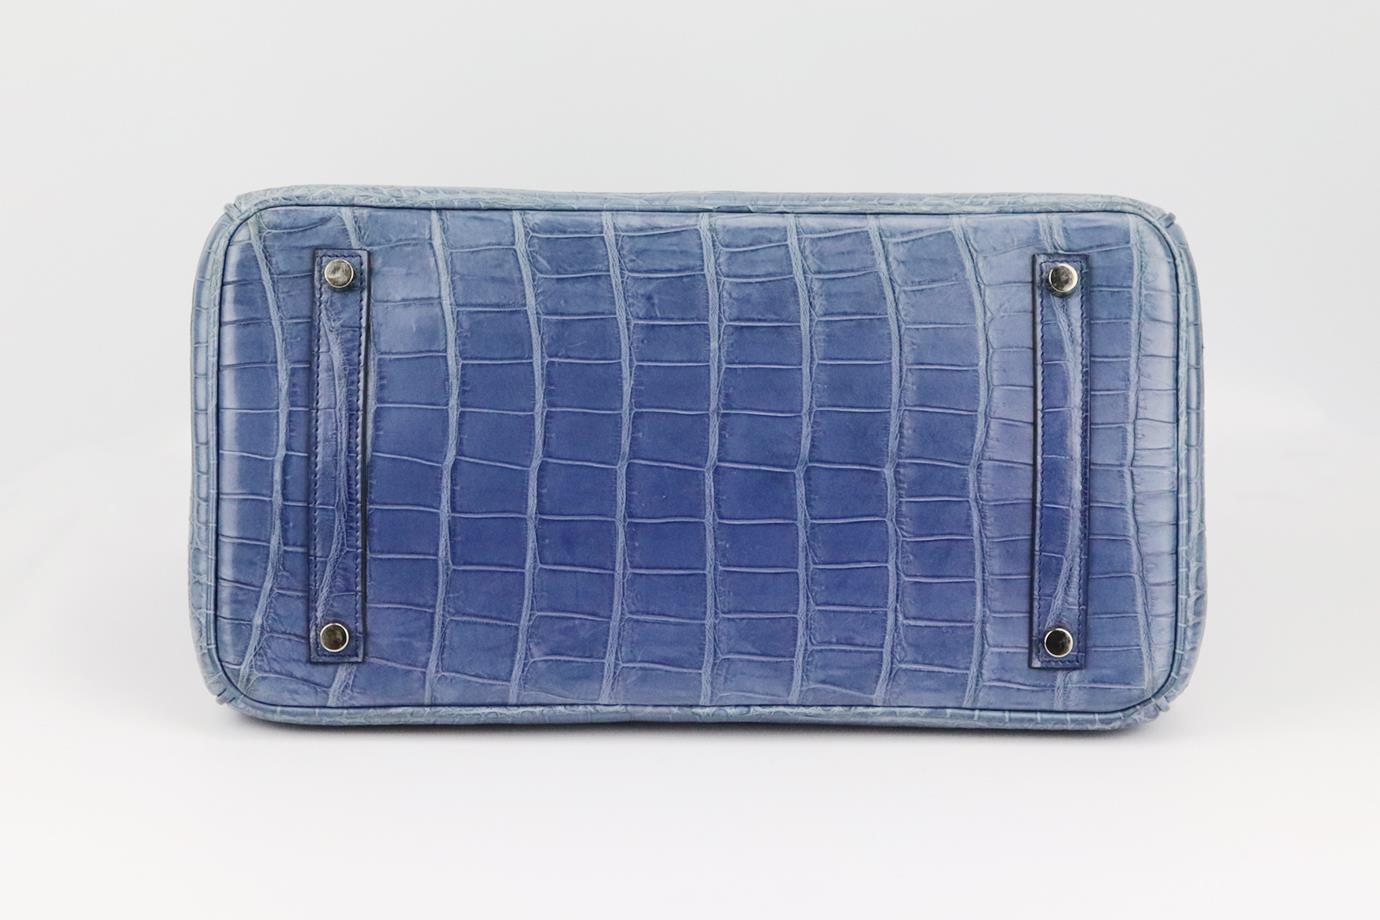 Hermès 2010 Birkin 35cm Matte Crocodile Porosus Leather Bag For Sale 2